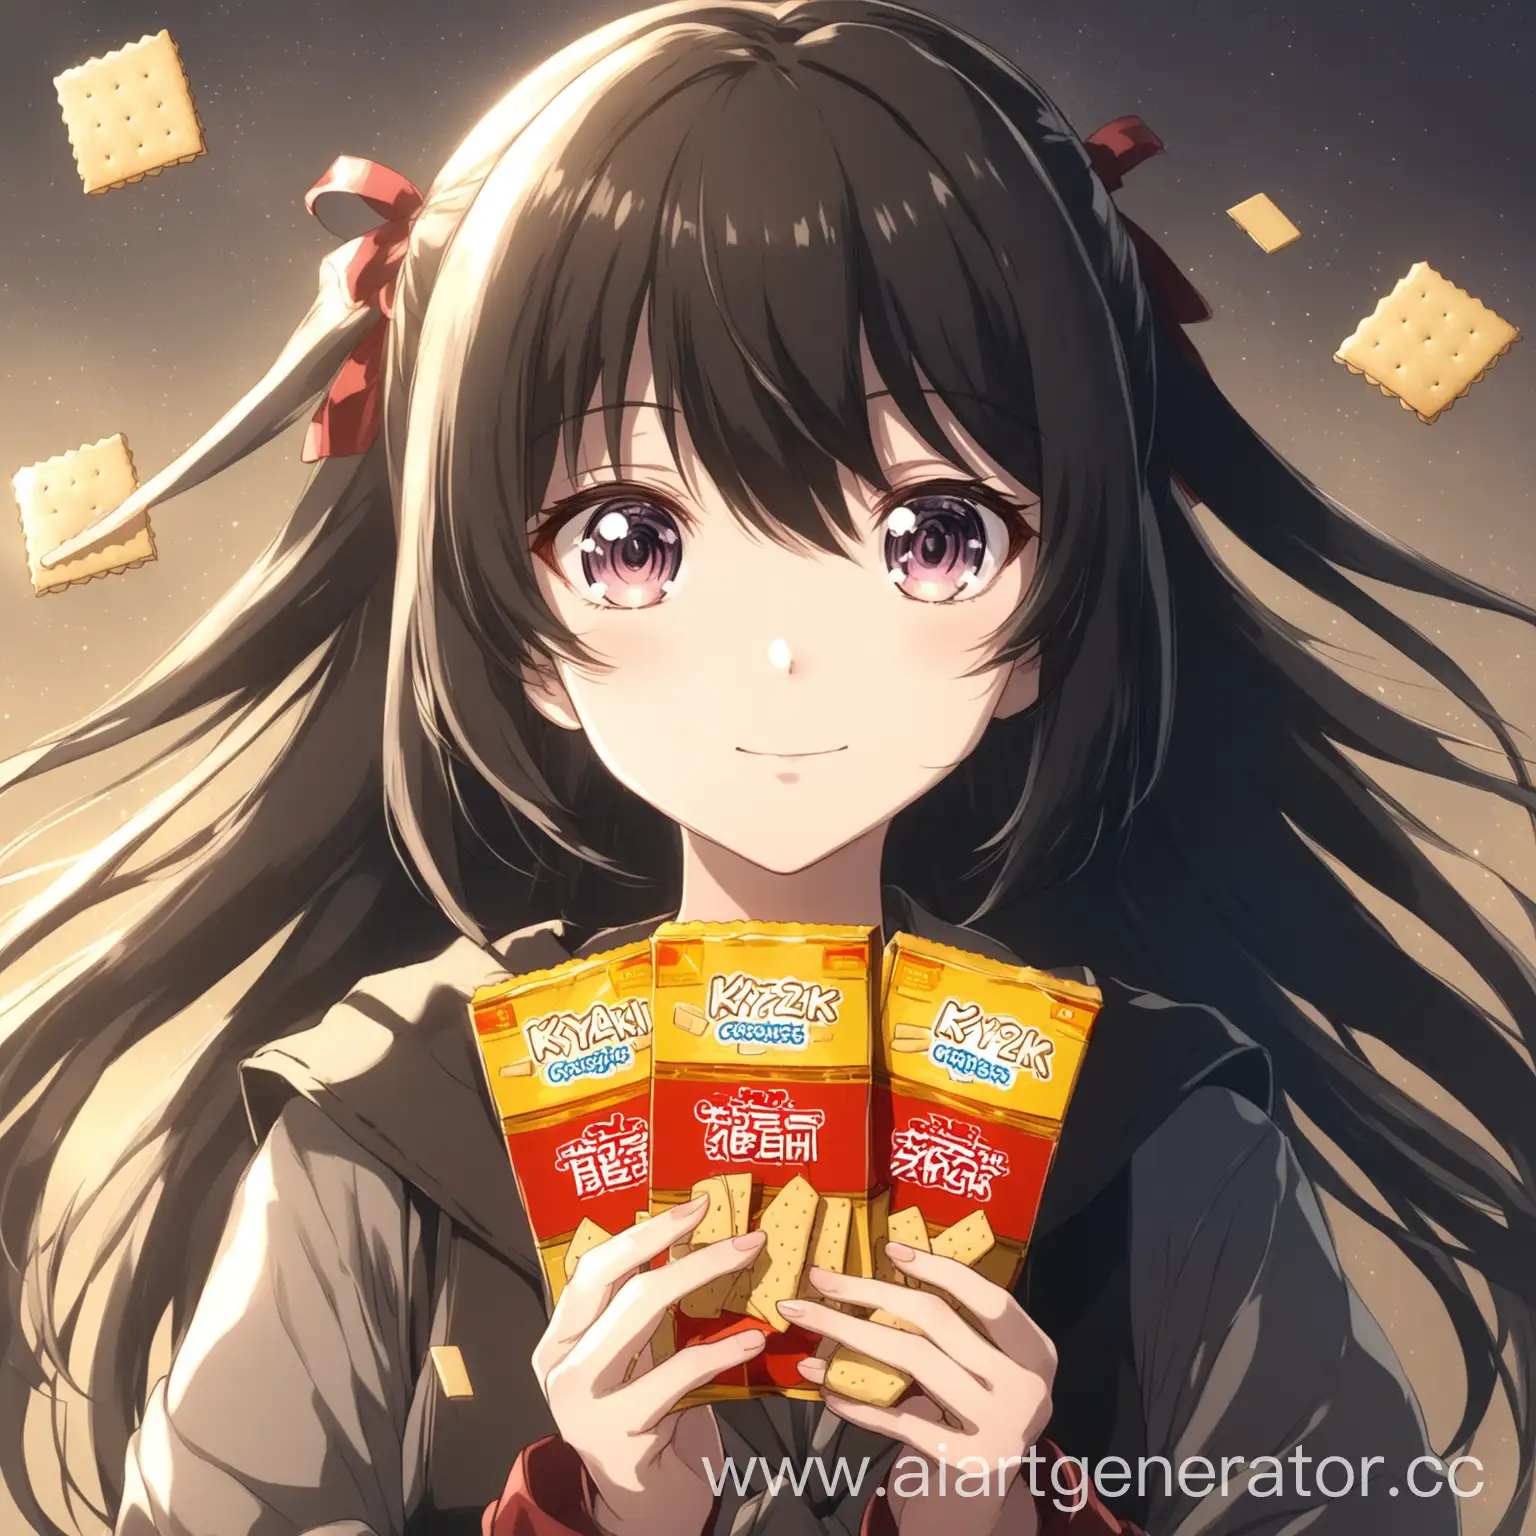 Anime-Girl-Holding-Kyryezhki-Crackers-in-Hands